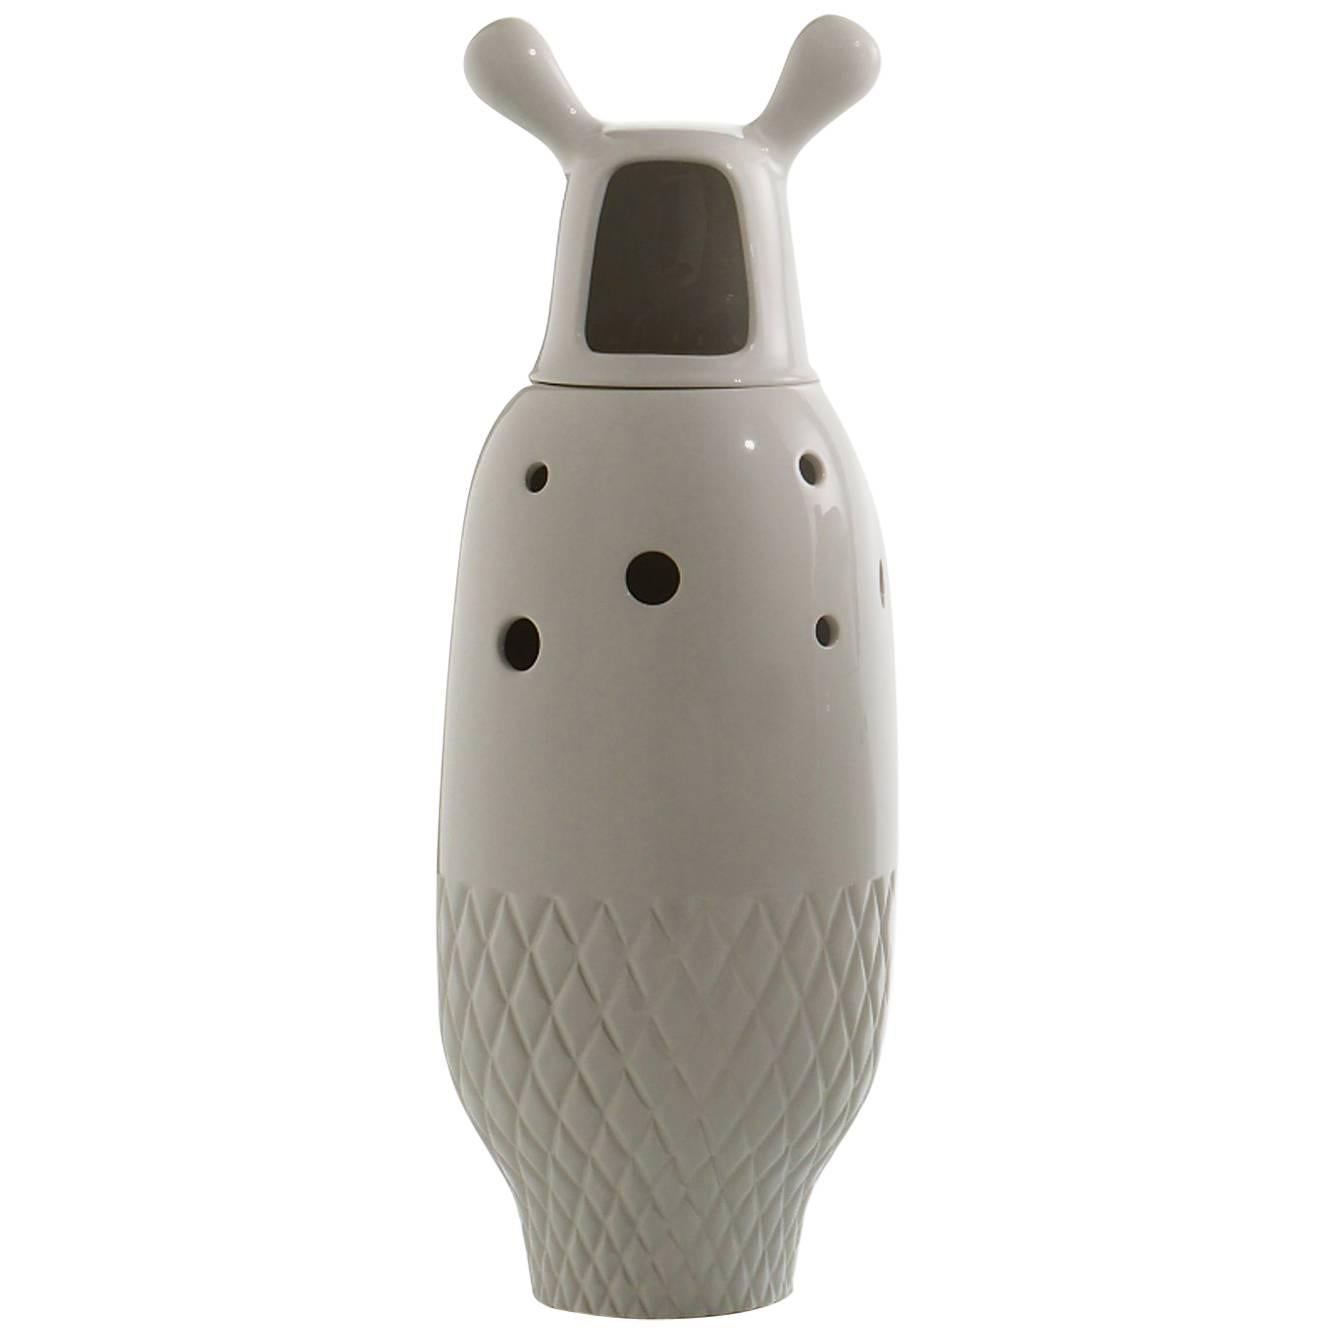 Nº 5 Contemporary Glazed Ceramic White Showtime Vase by Jaime Hayon Spain